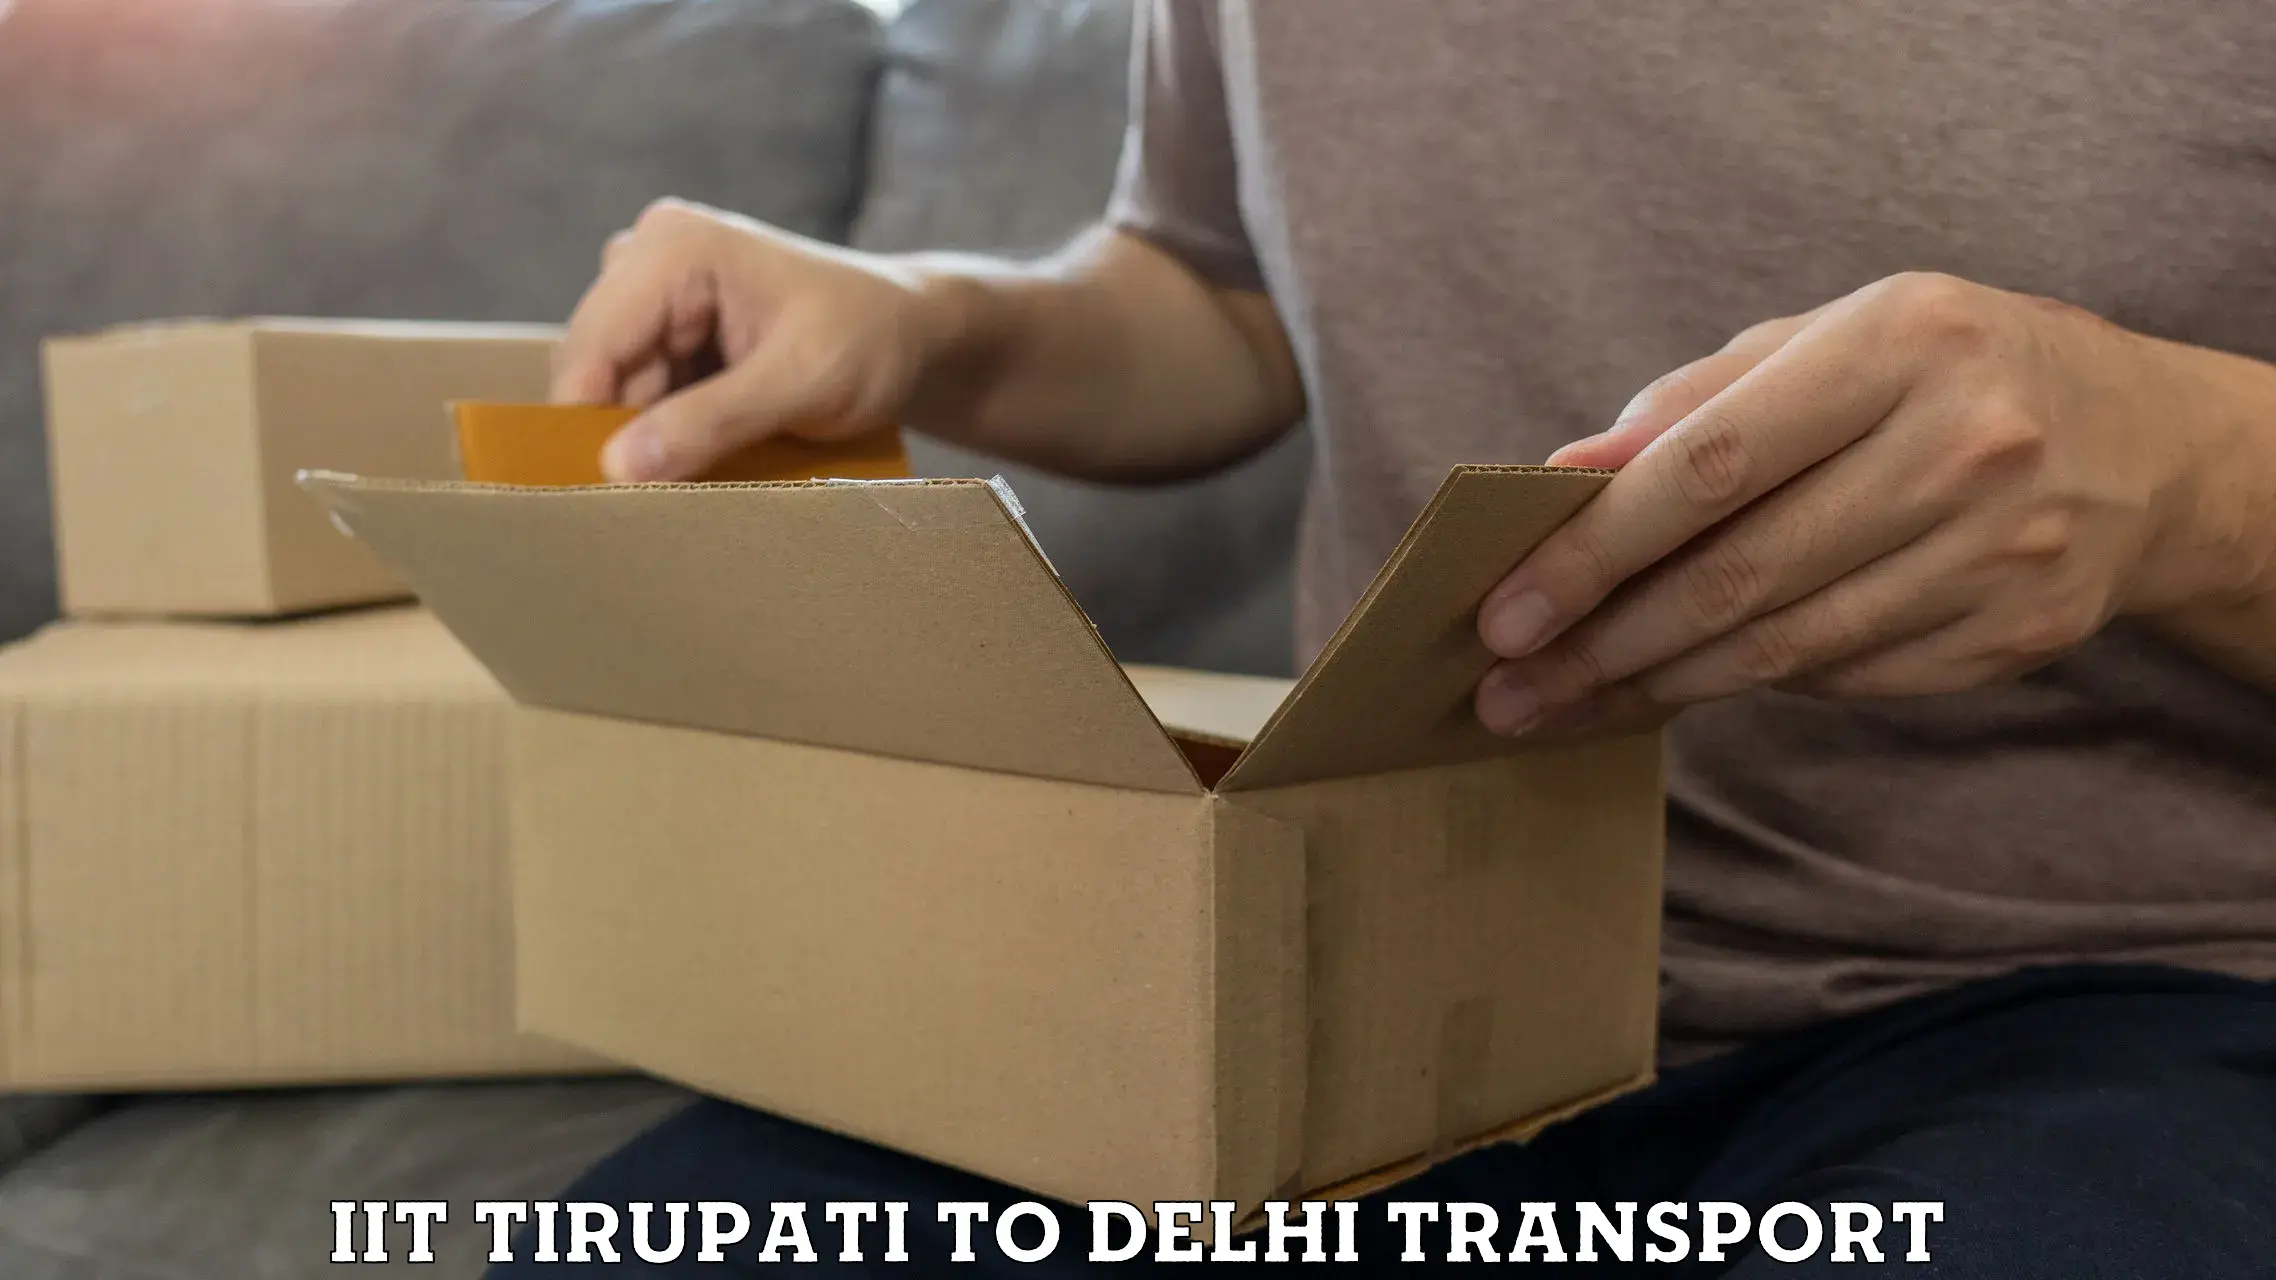 Cycle transportation service IIT Tirupati to East Delhi